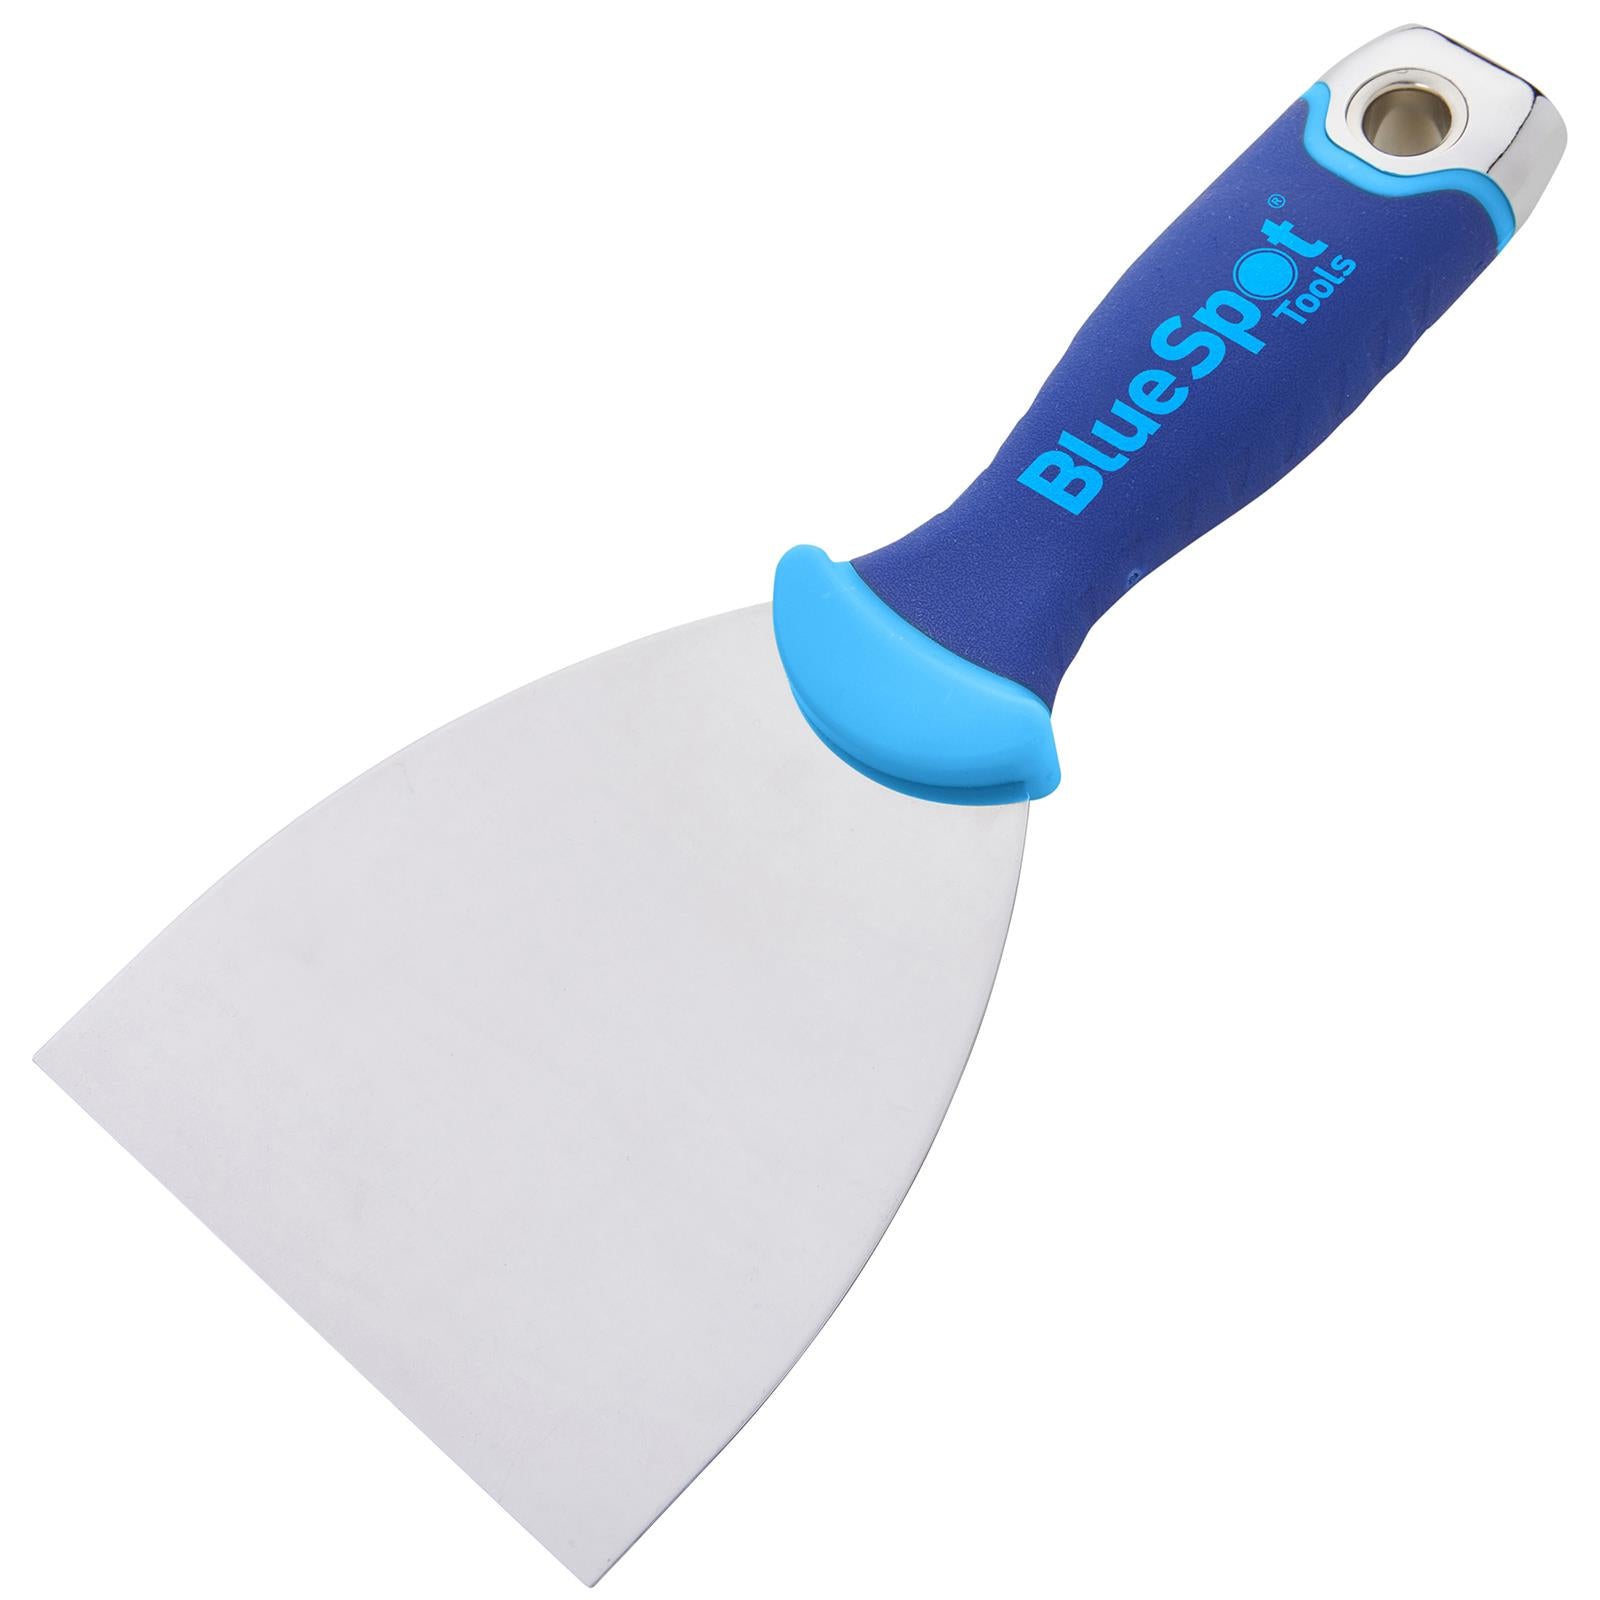 BlueSpot Stripping Knife for Paint Wallpaper 100mm 4in